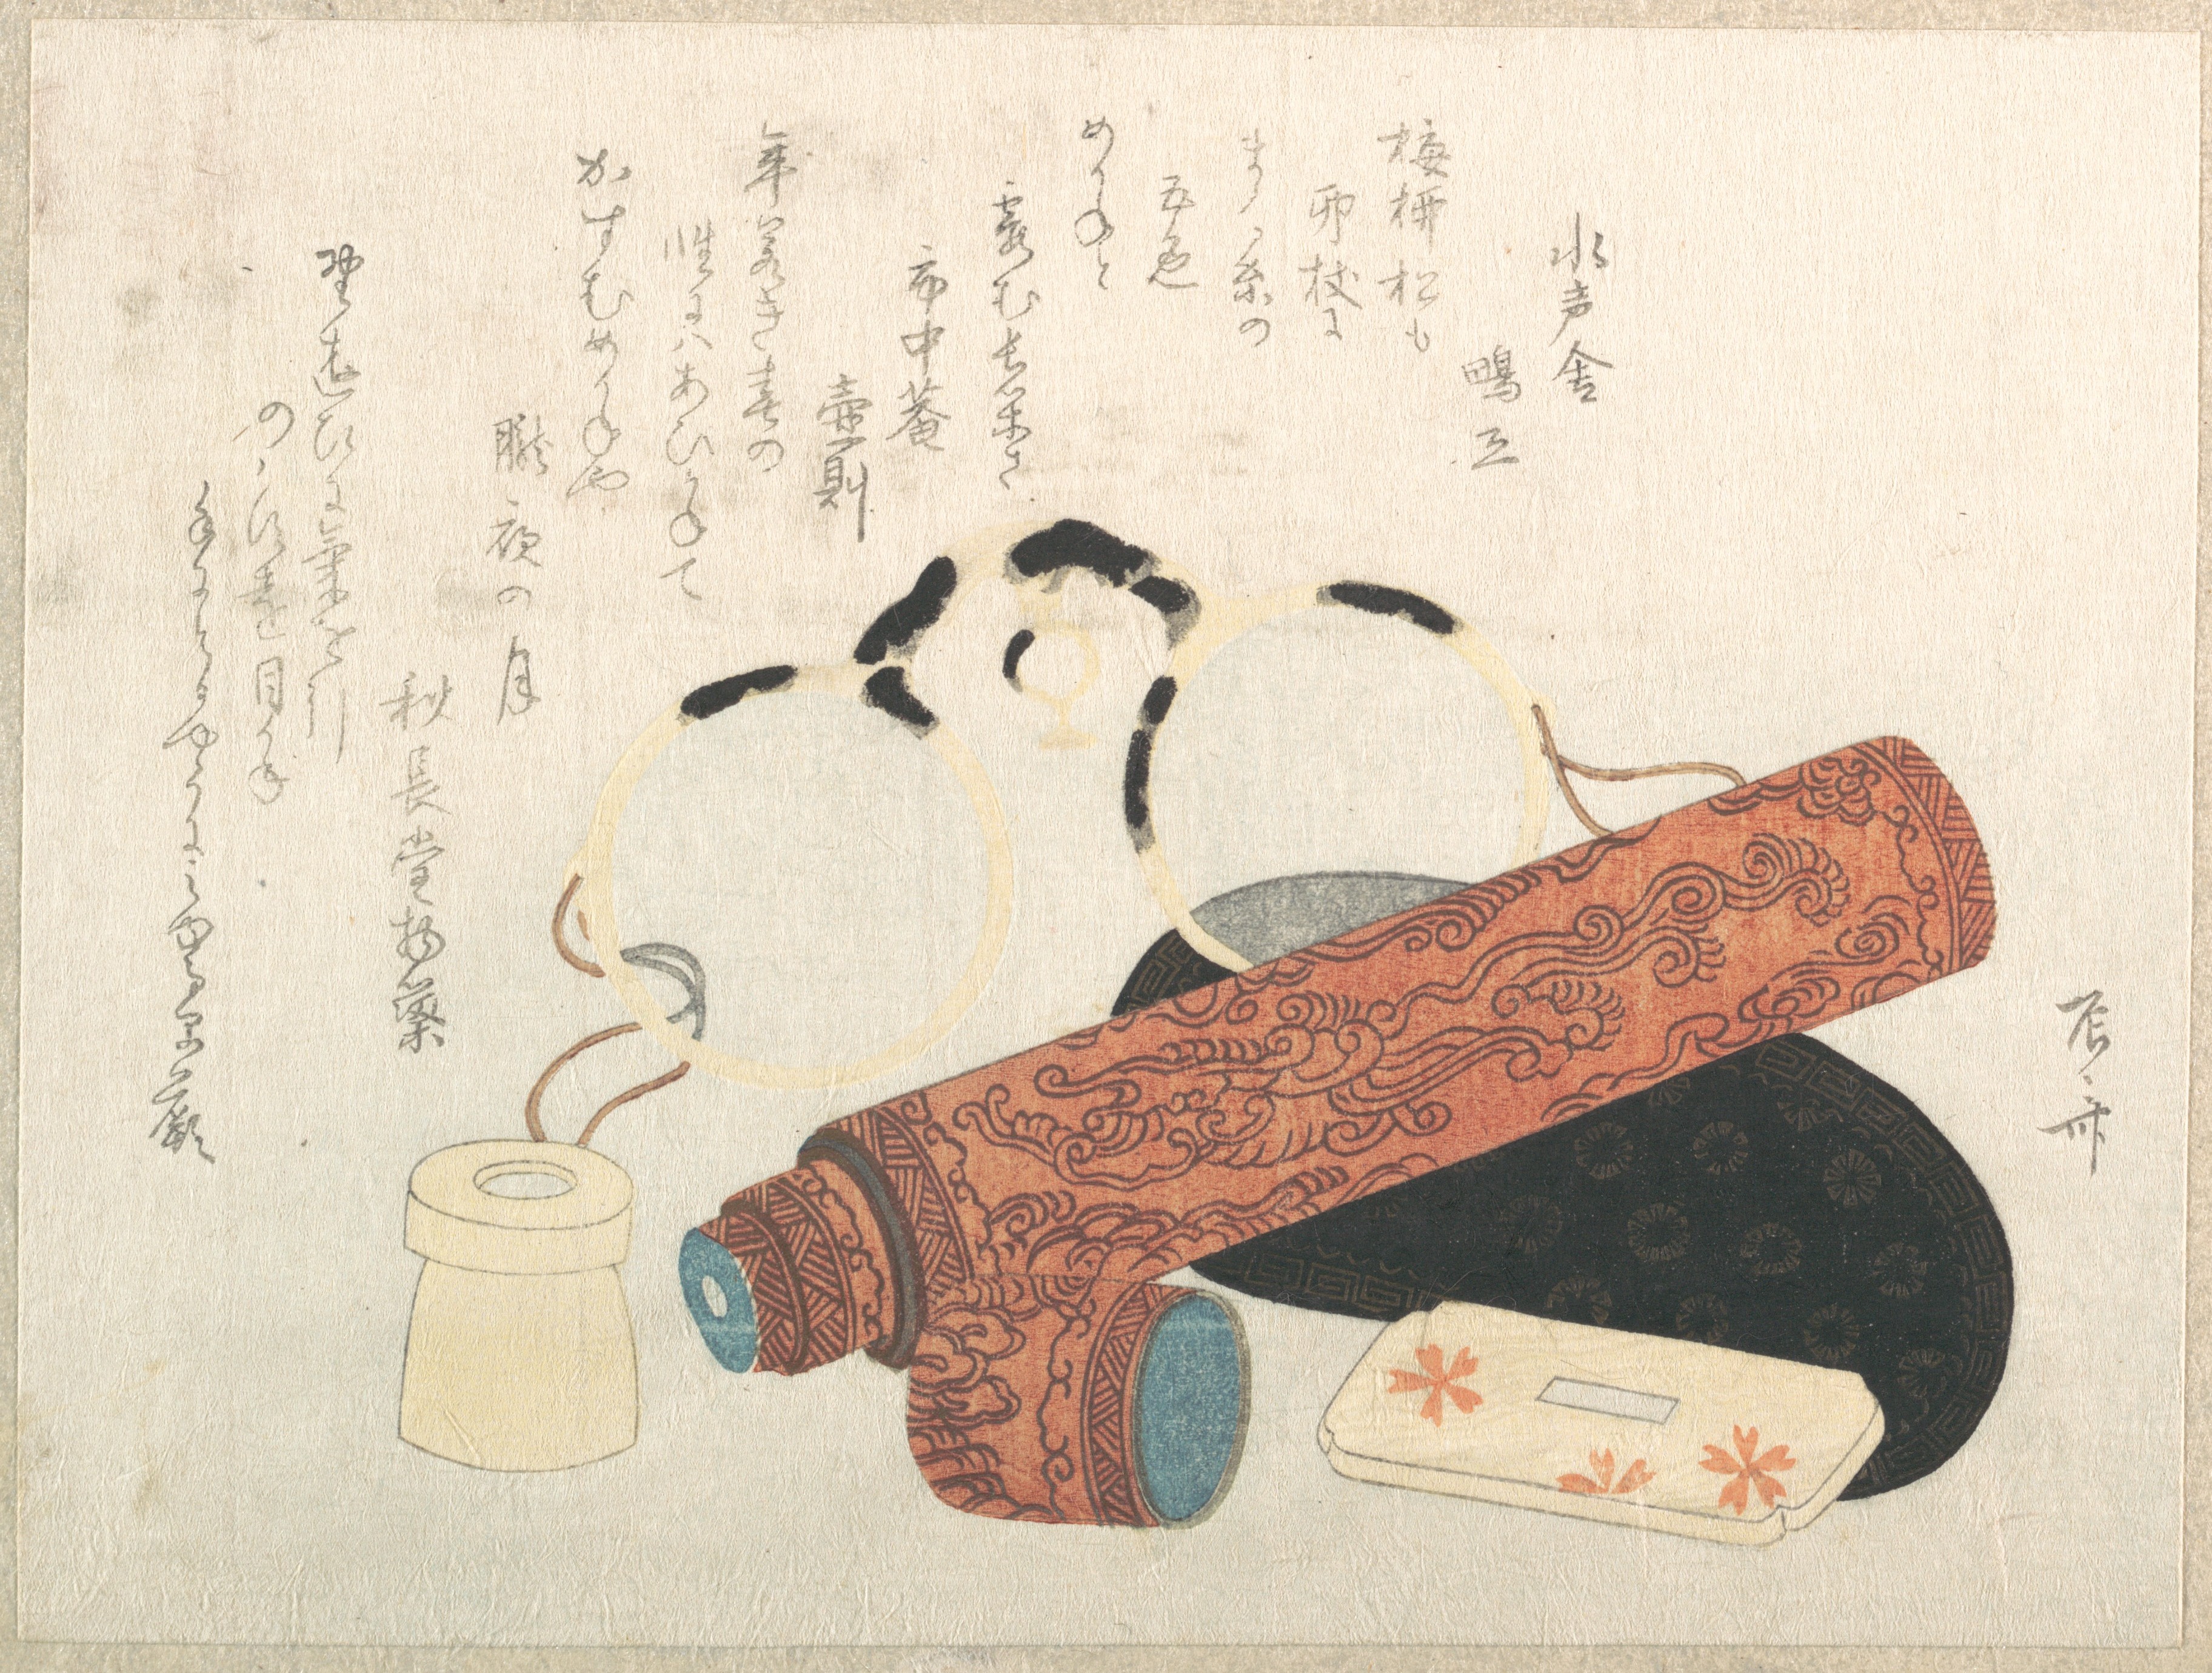 19th Century Japanese Woodblock Print